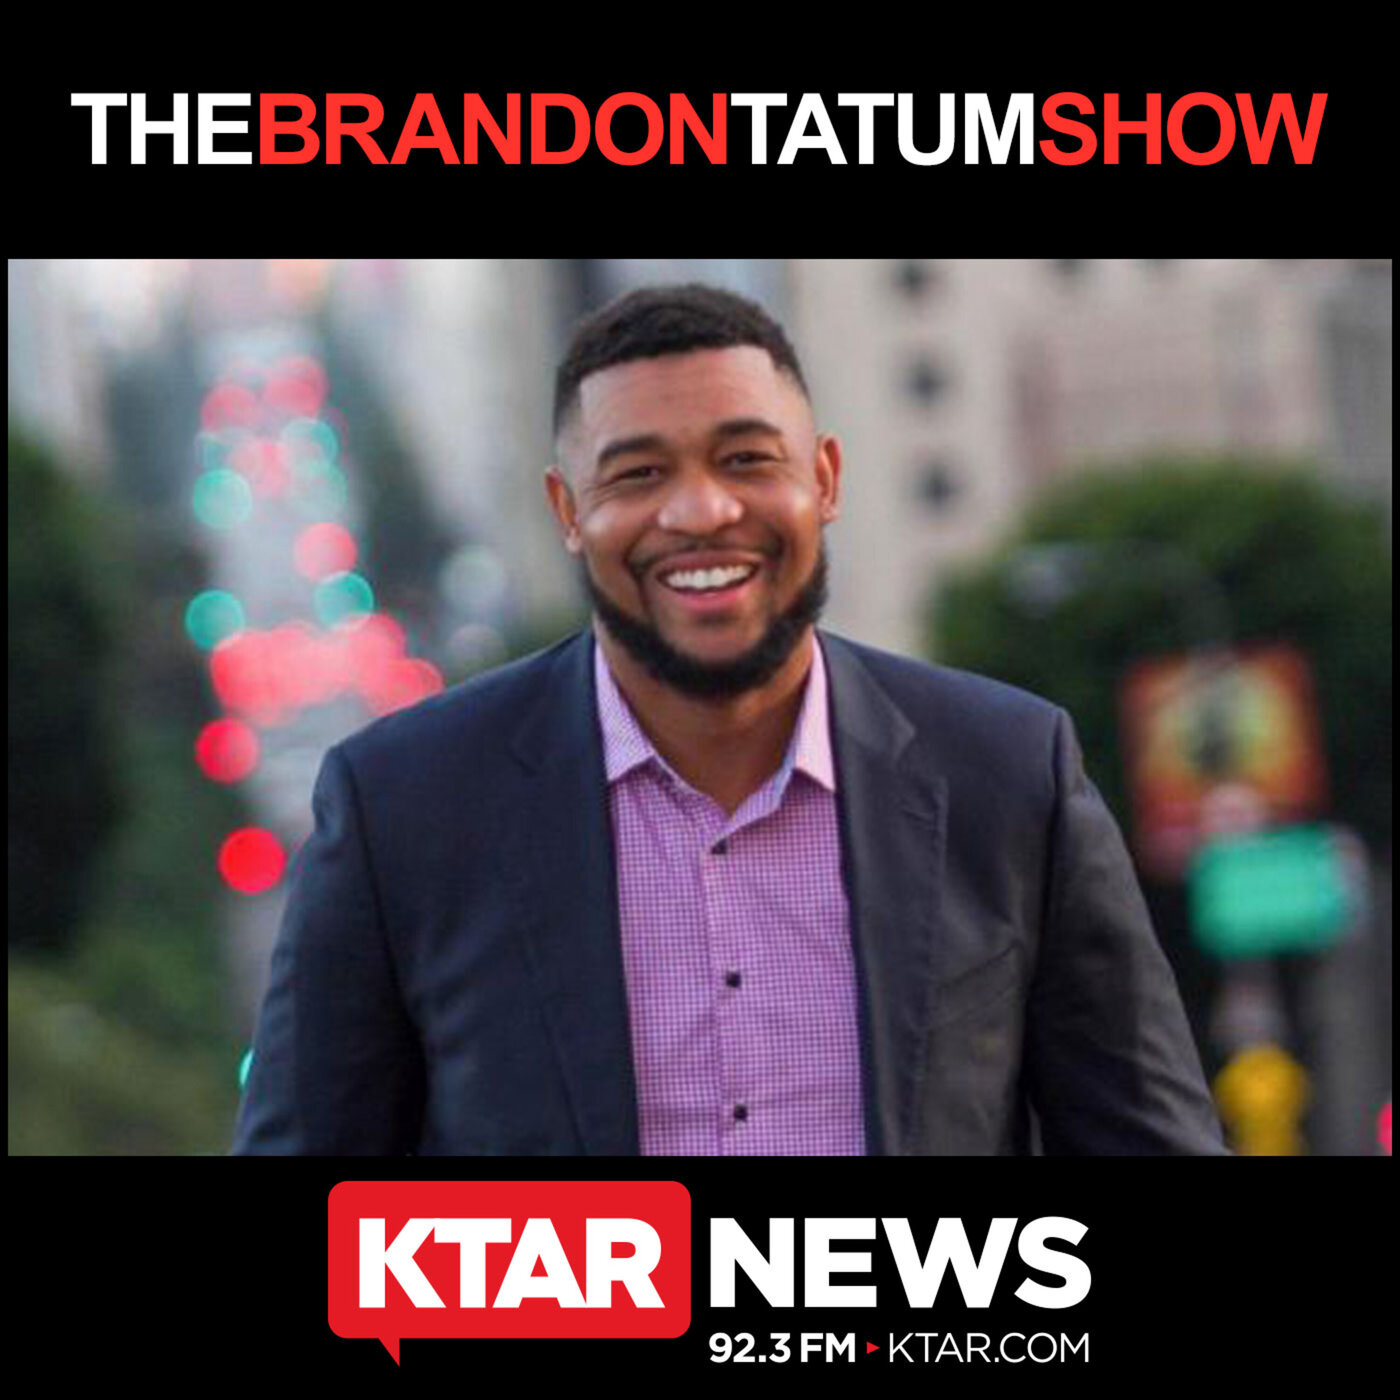 February 8, 2020 - The Brandon Tatum Show